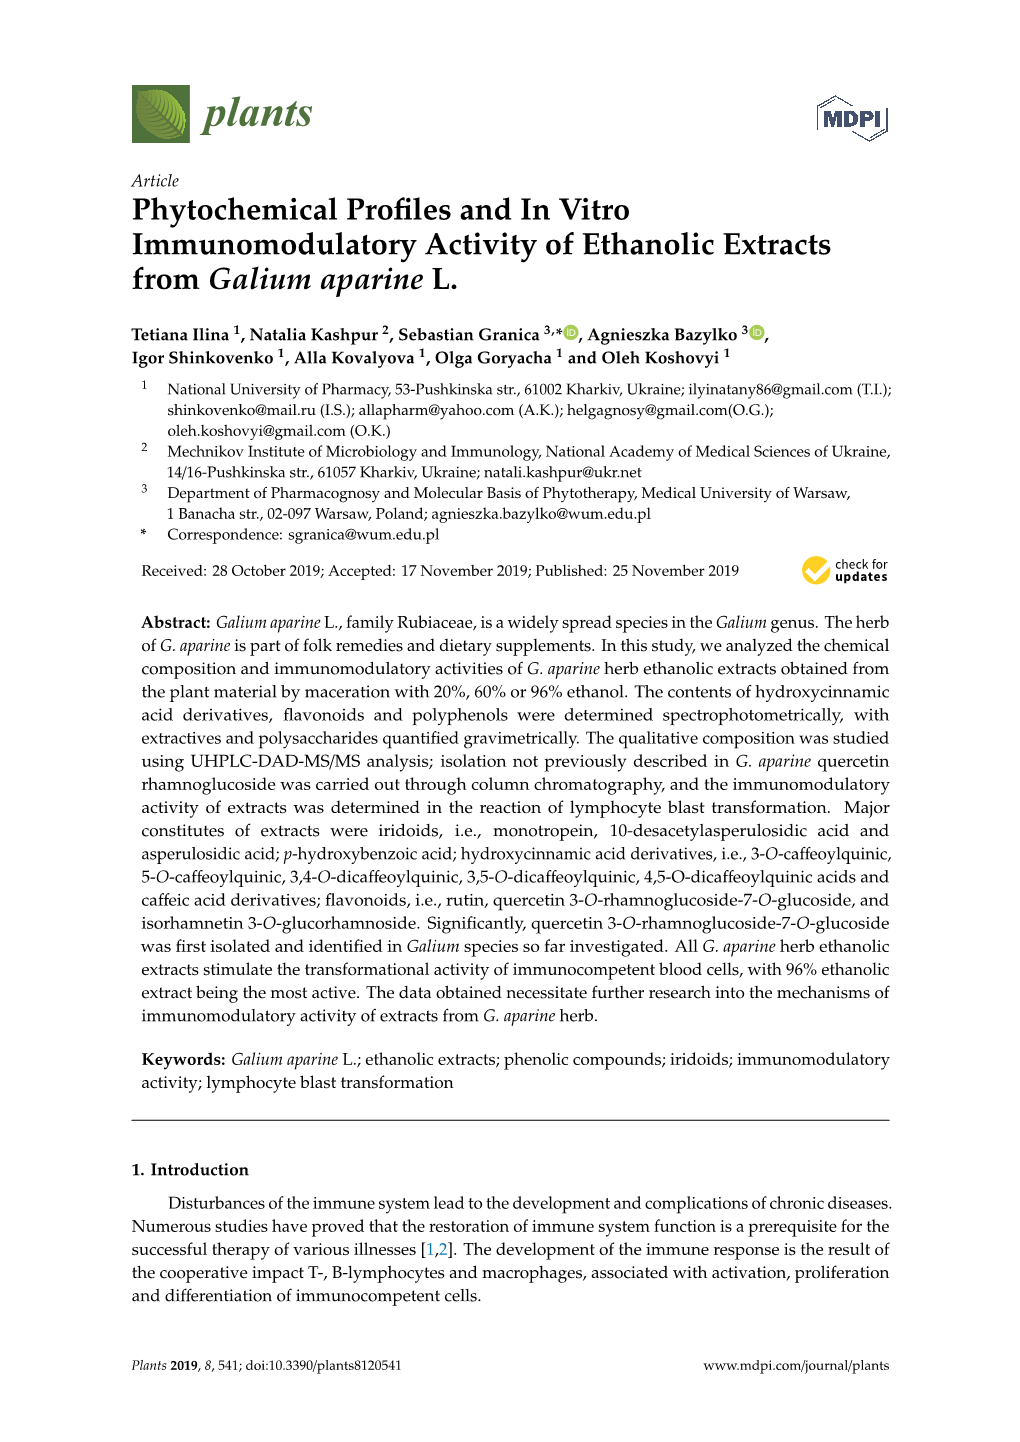 Phytochemical Profiles and in Vitro Immunomodulatory Activity Of